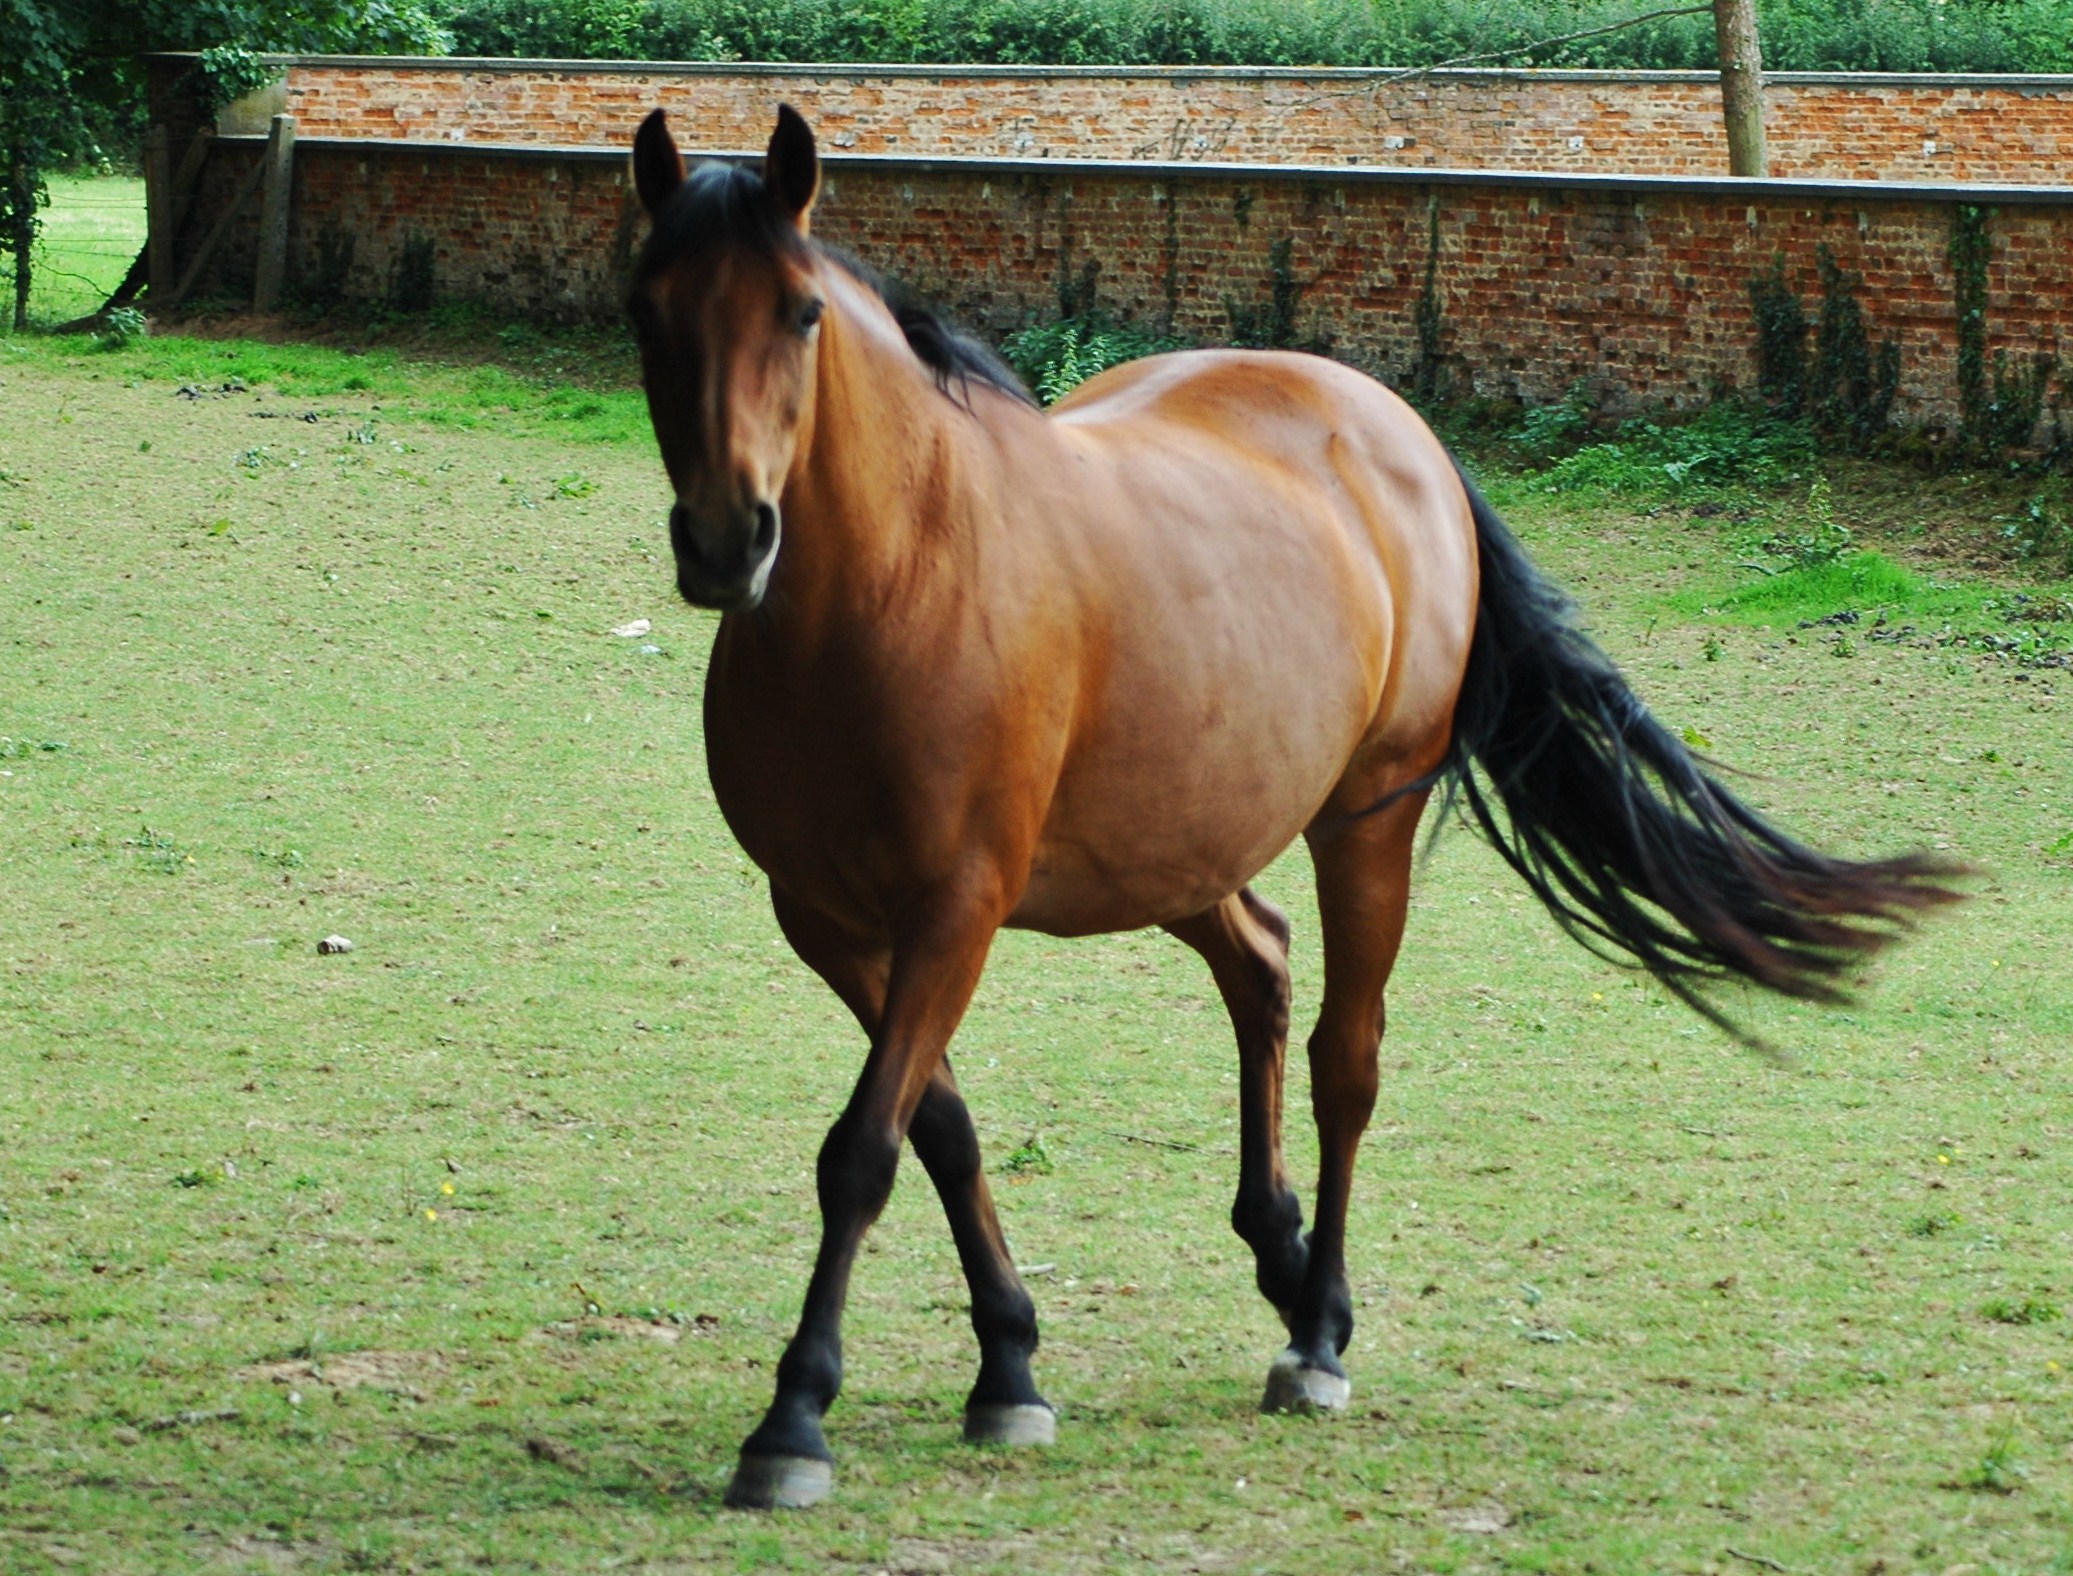 a horse walking through an enclosed grass area